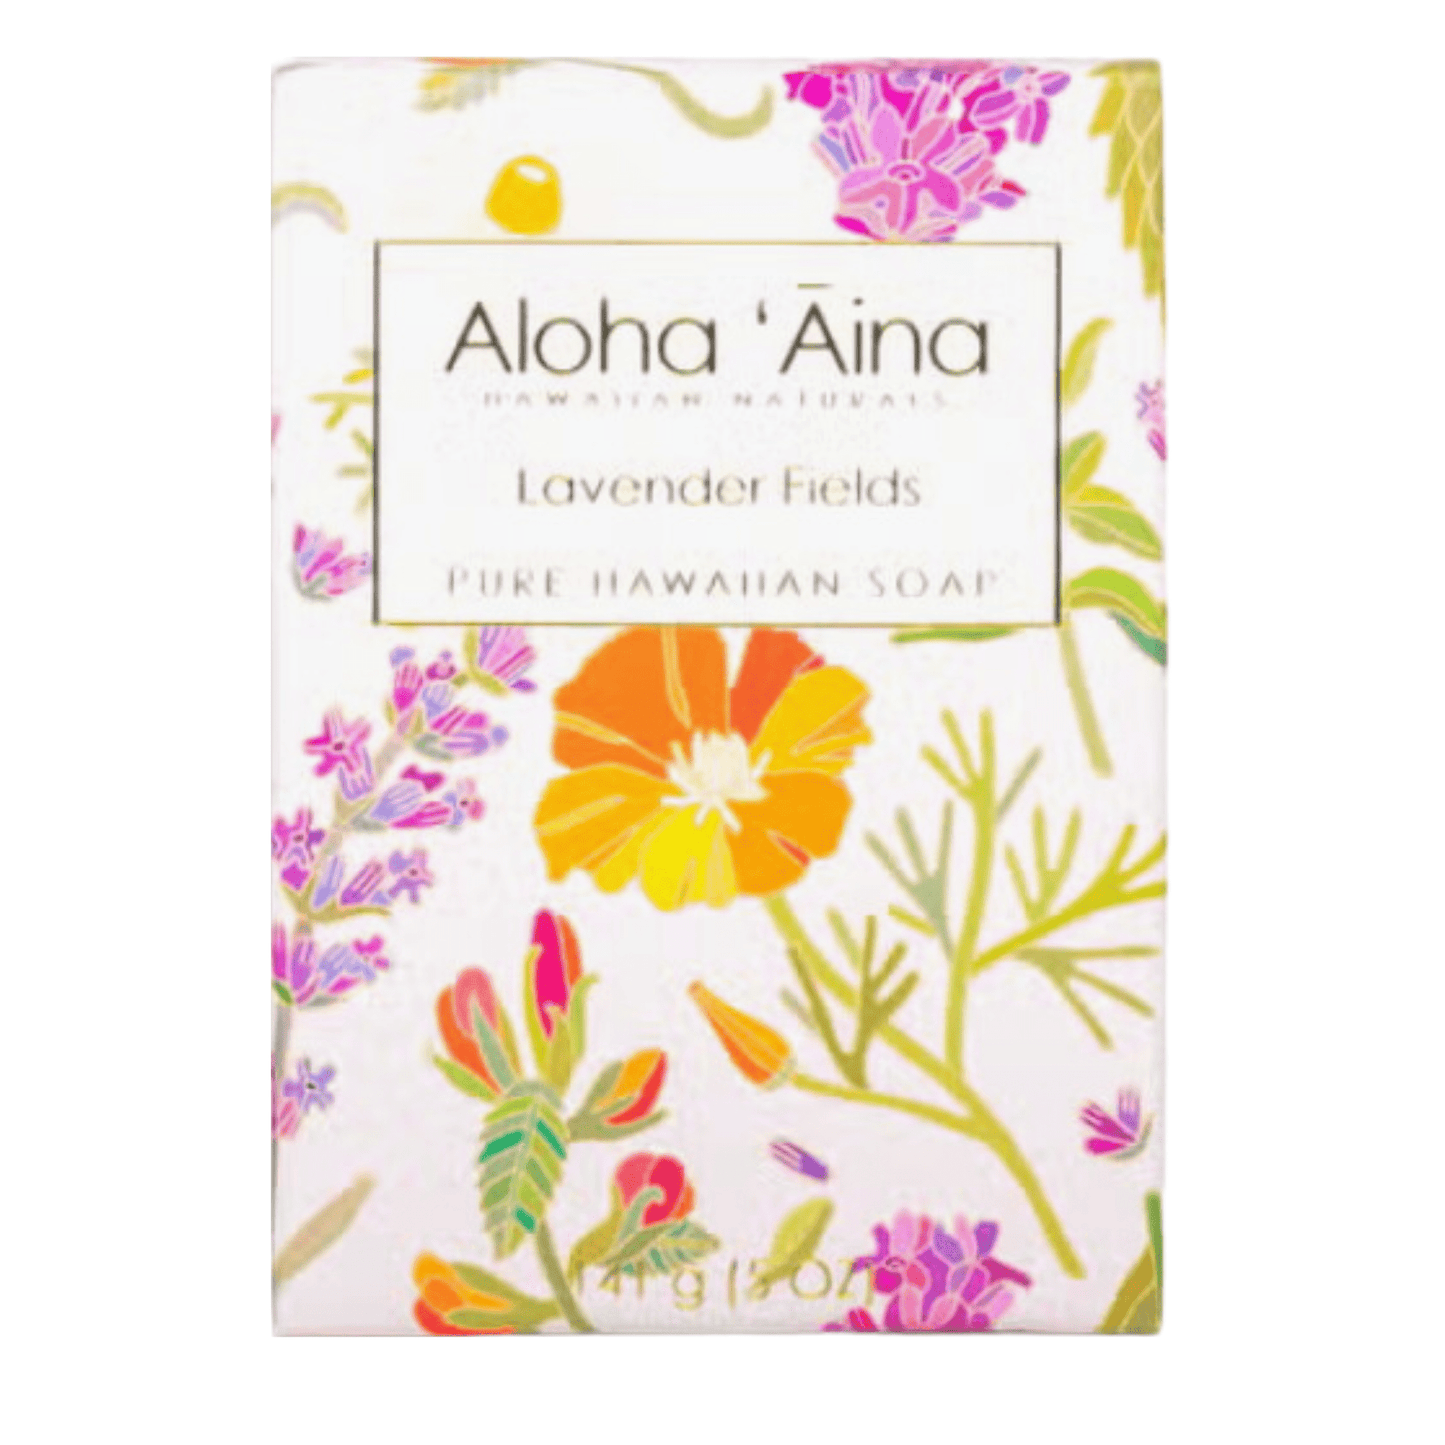 Aloha Aina Lavender Fields Natural Soap